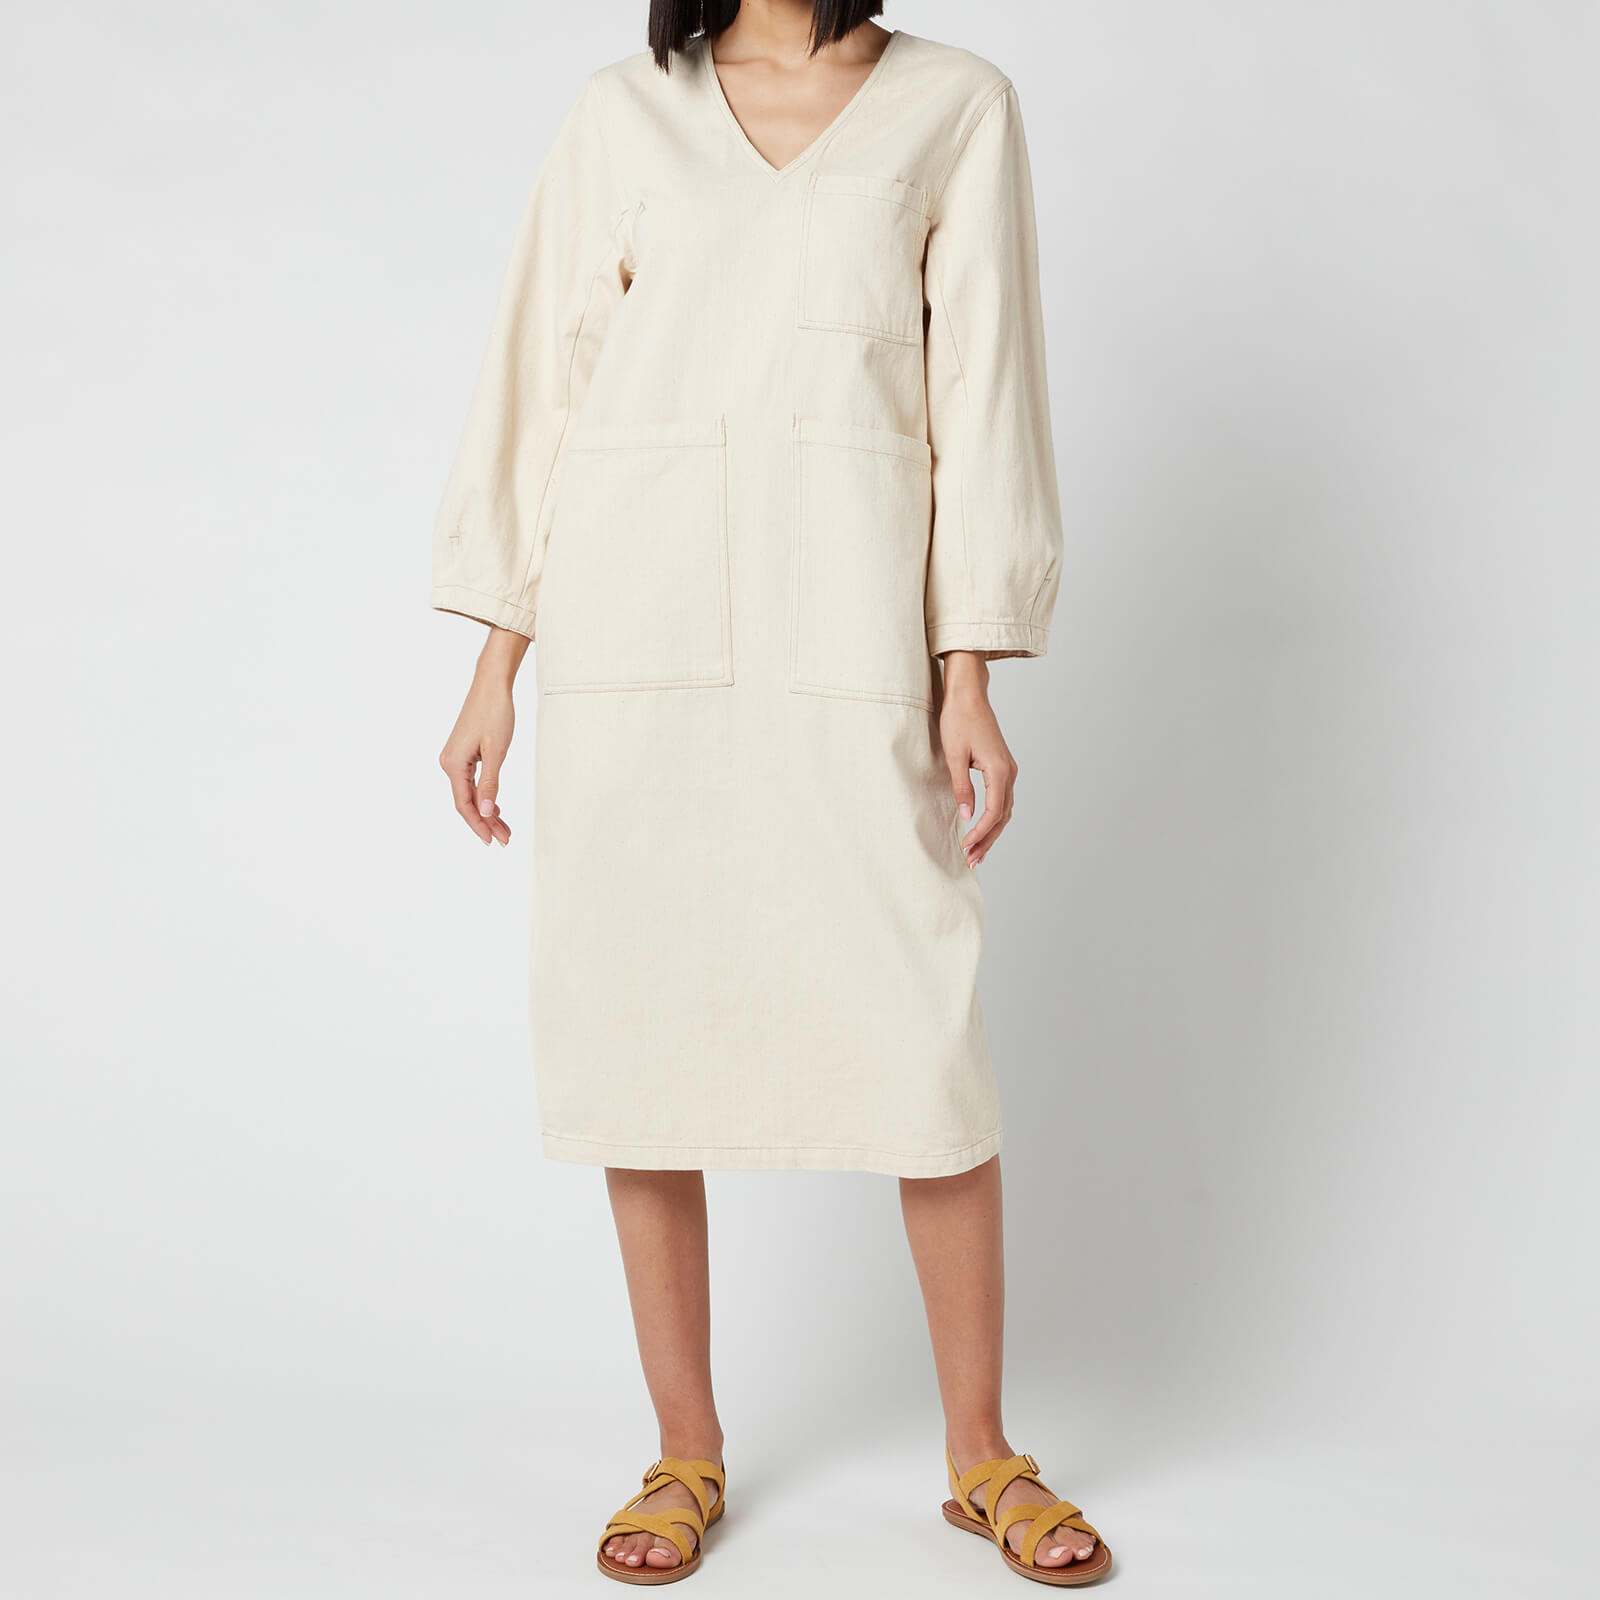 Image of L.F Markey Women's Merlon Dress - Ivory - UK 8